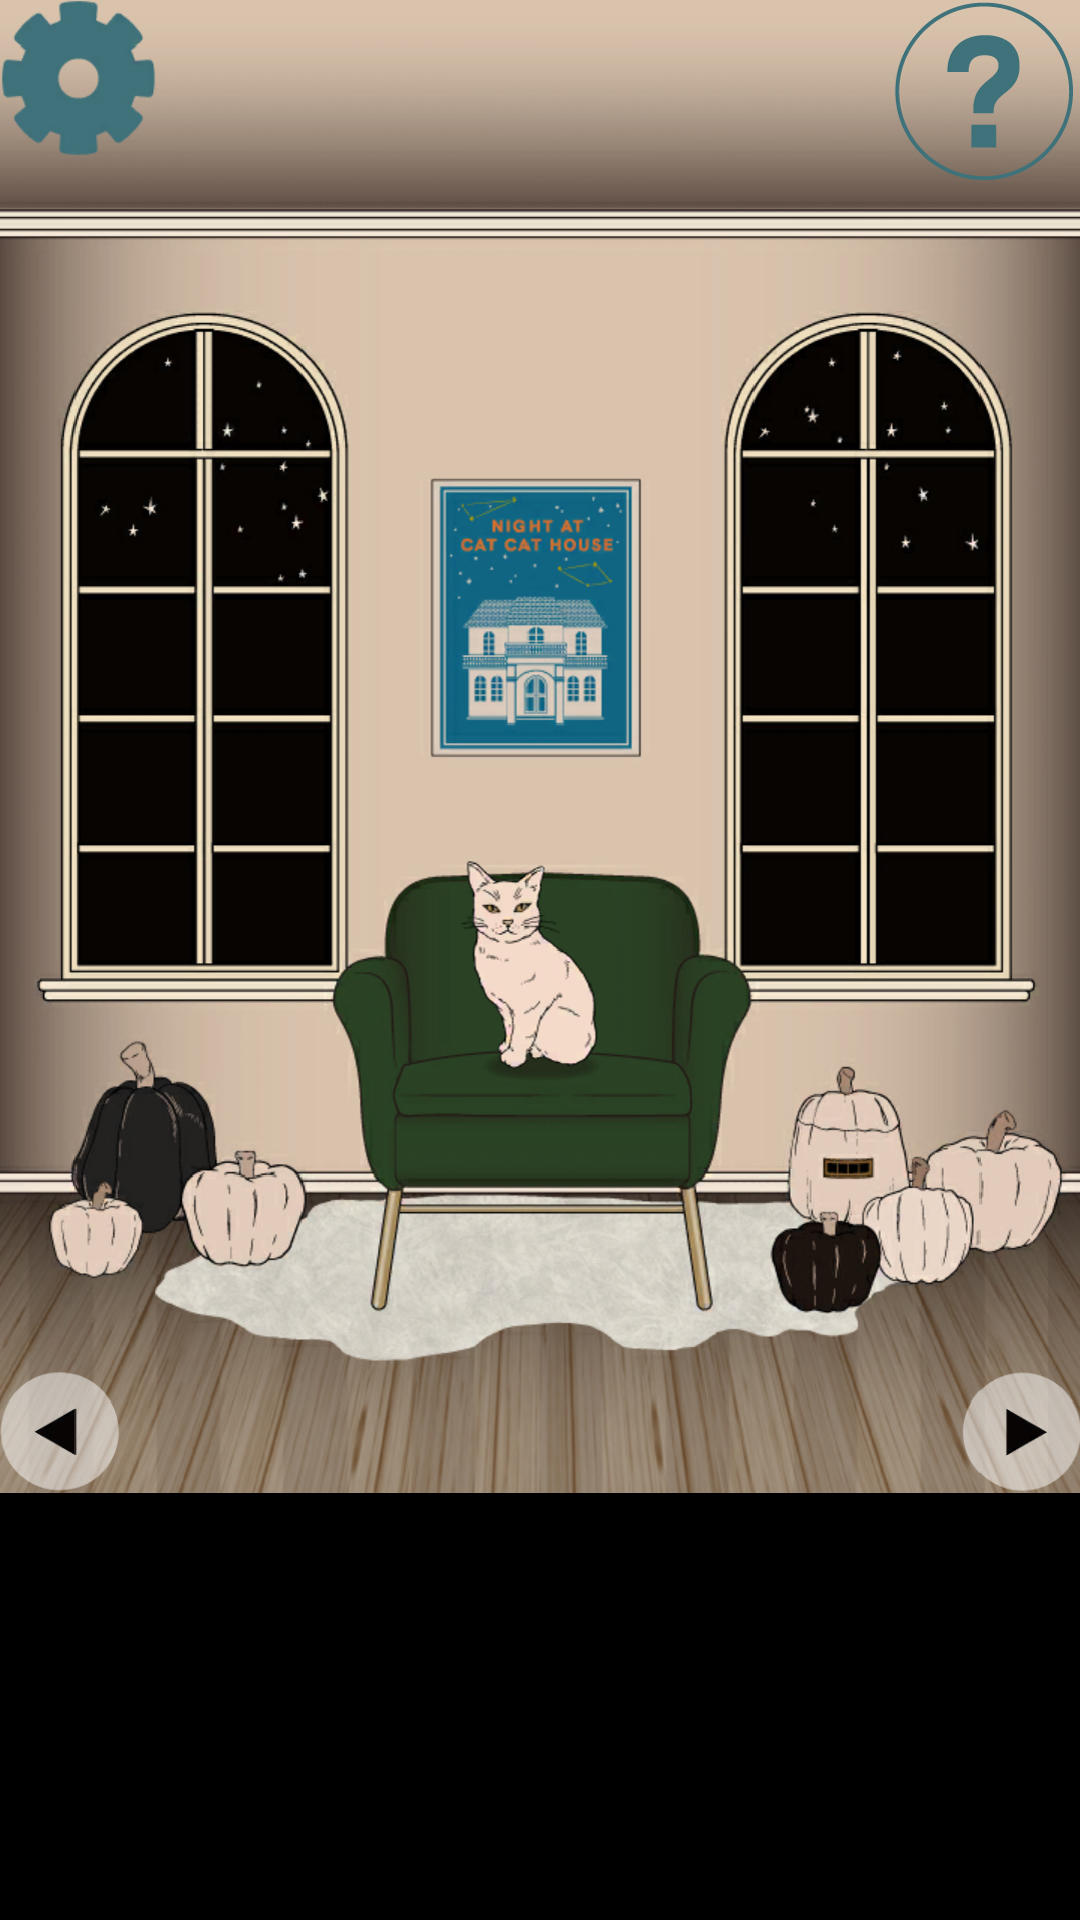 Screenshot of NIGHT AT CAT CAT HOUSE escape